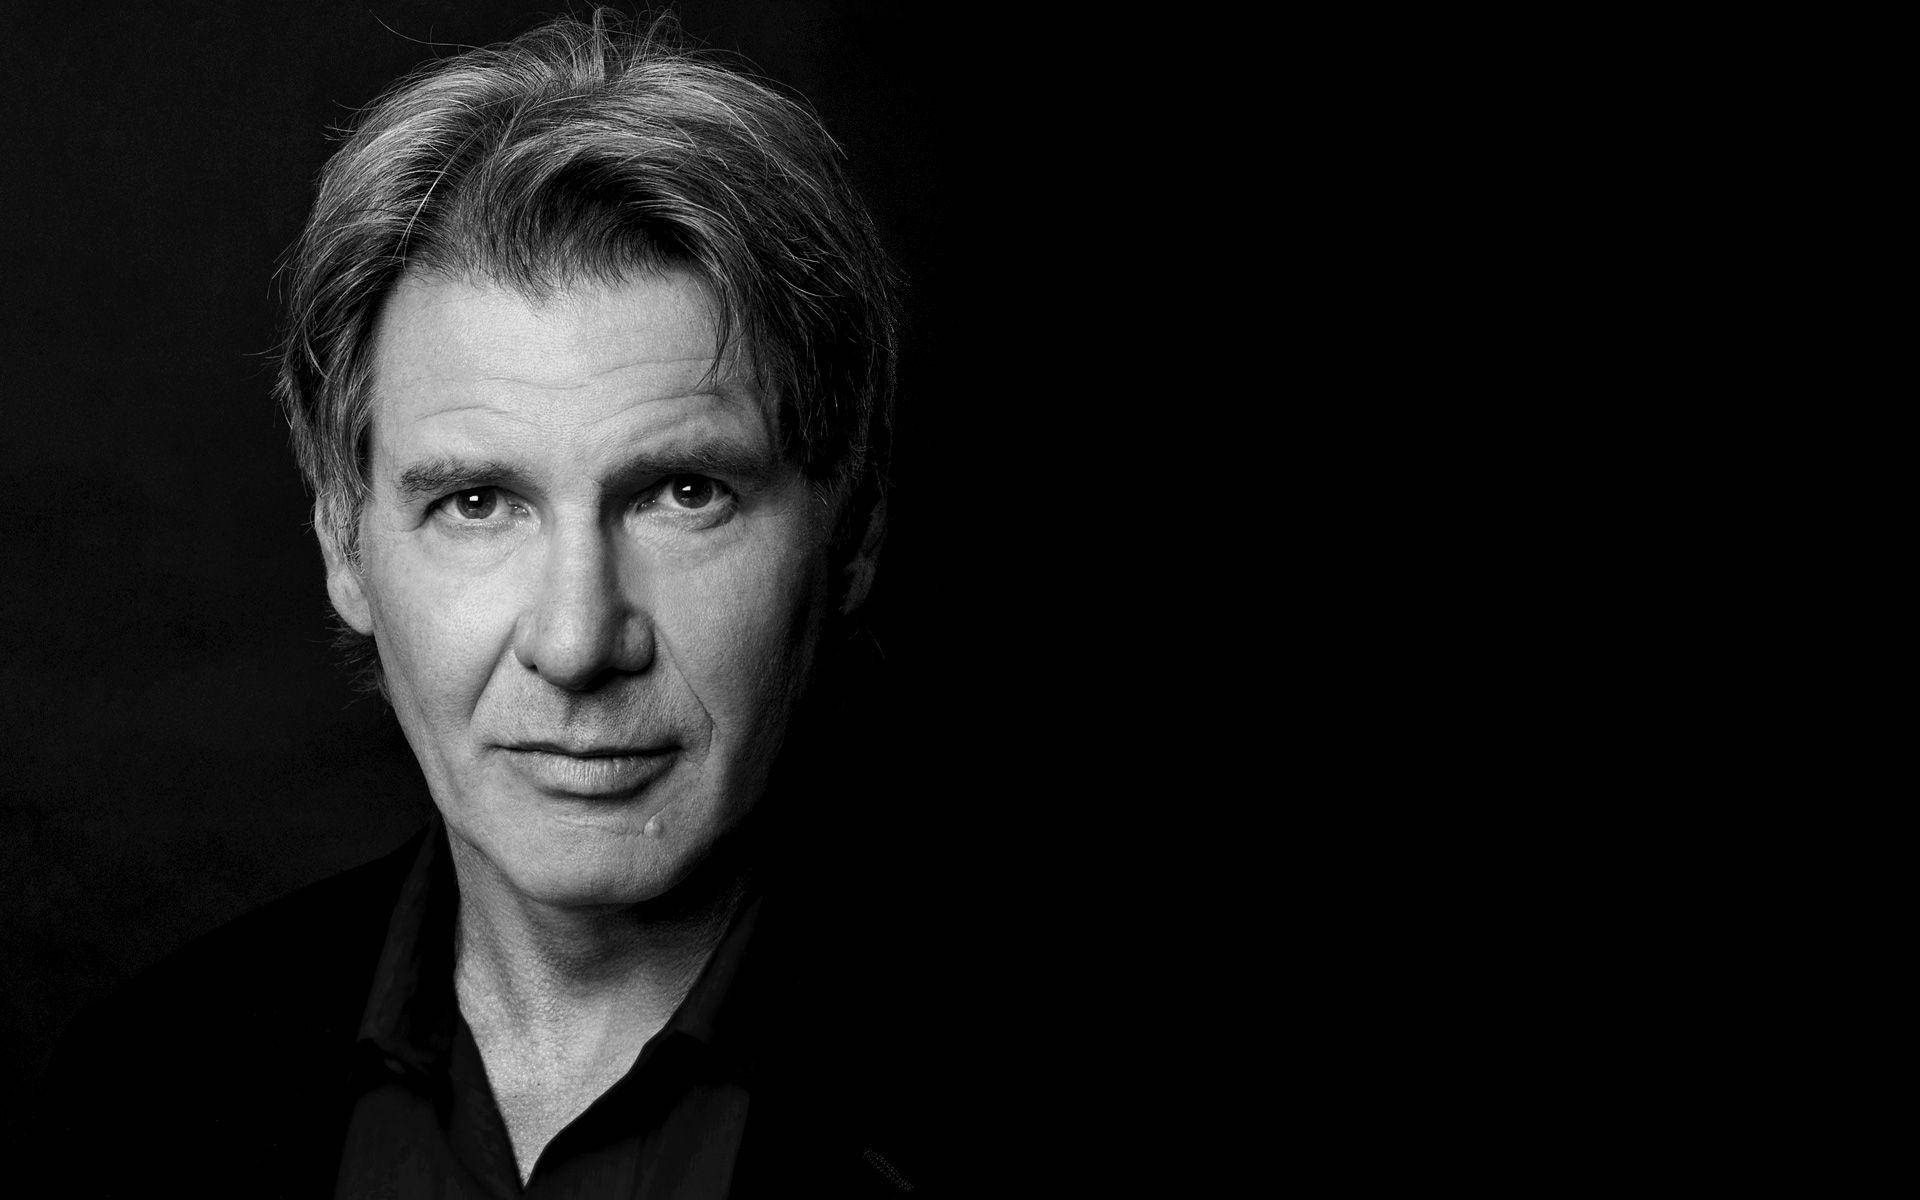 Harrison Ford Portrait Photoshoot Background